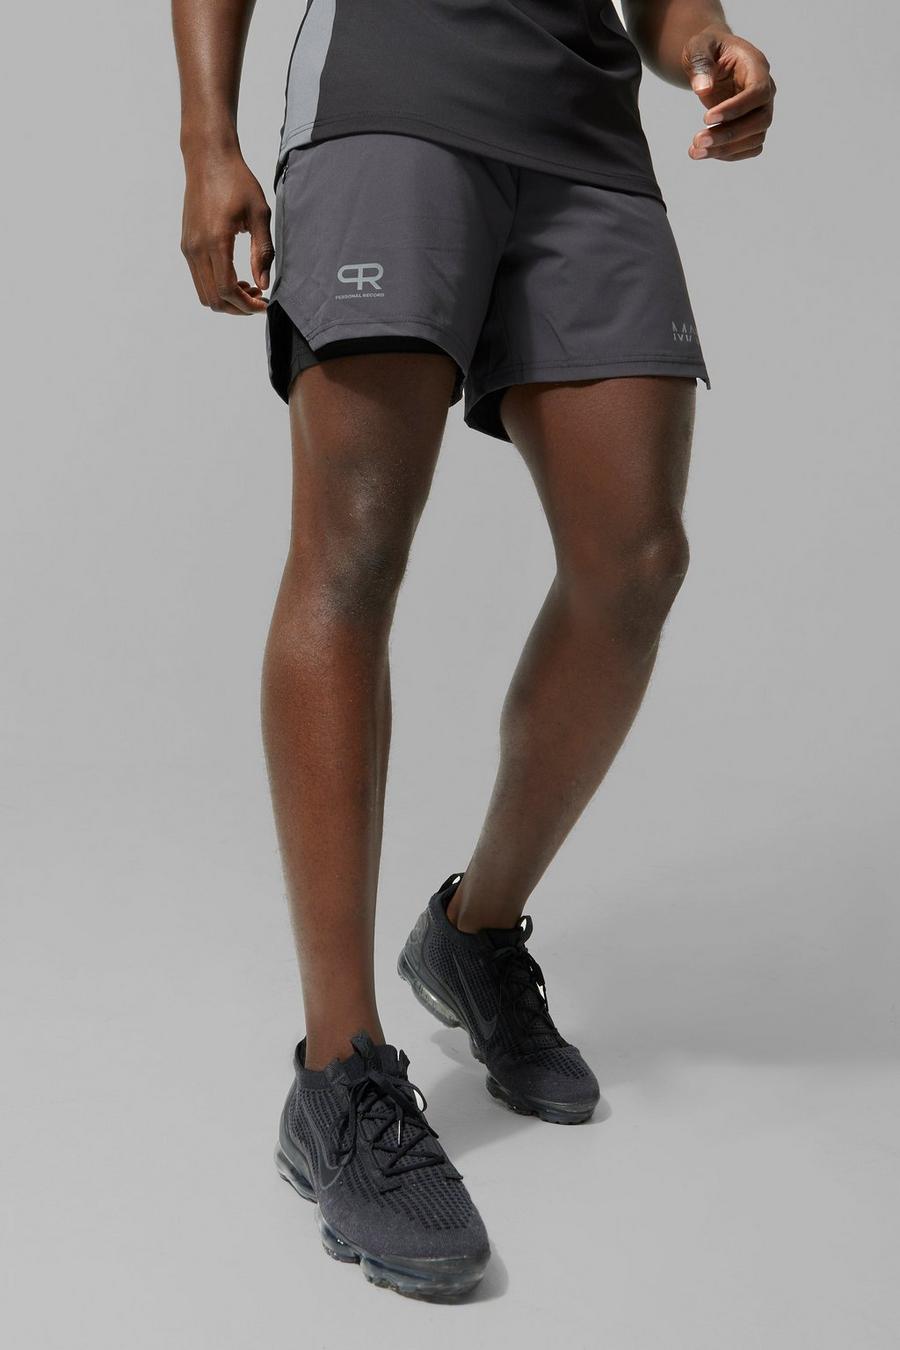 Man Active X Pr Kurz 2-in-1 Shorts, Charcoal grey